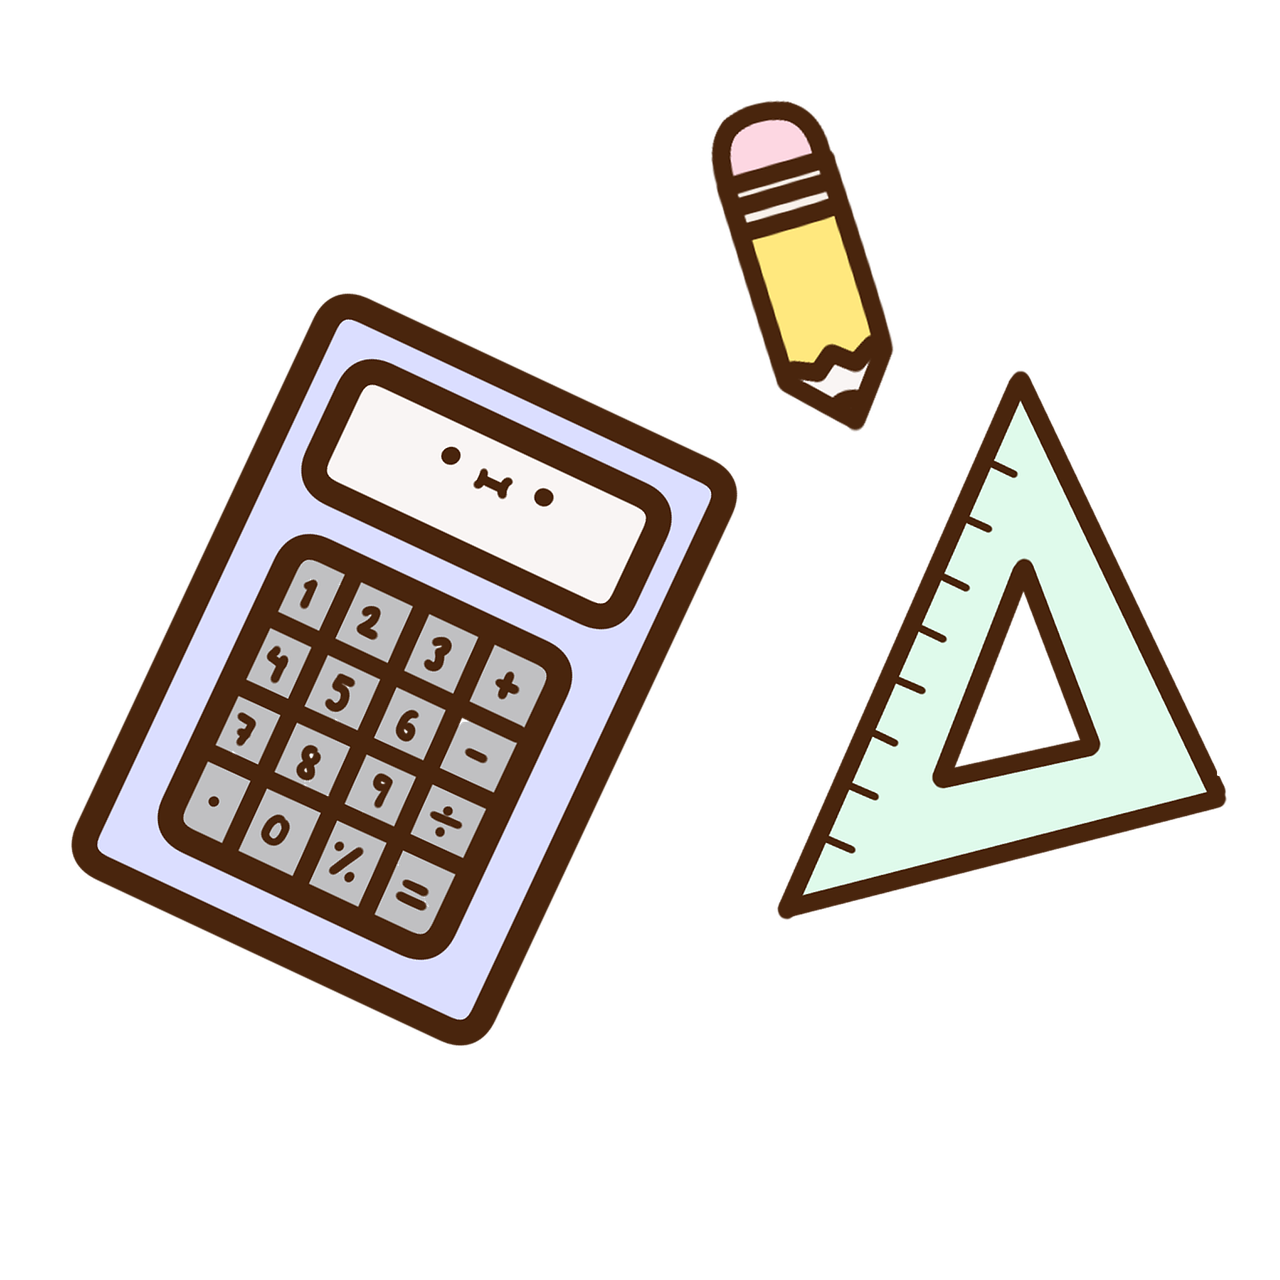 Slope Calculator